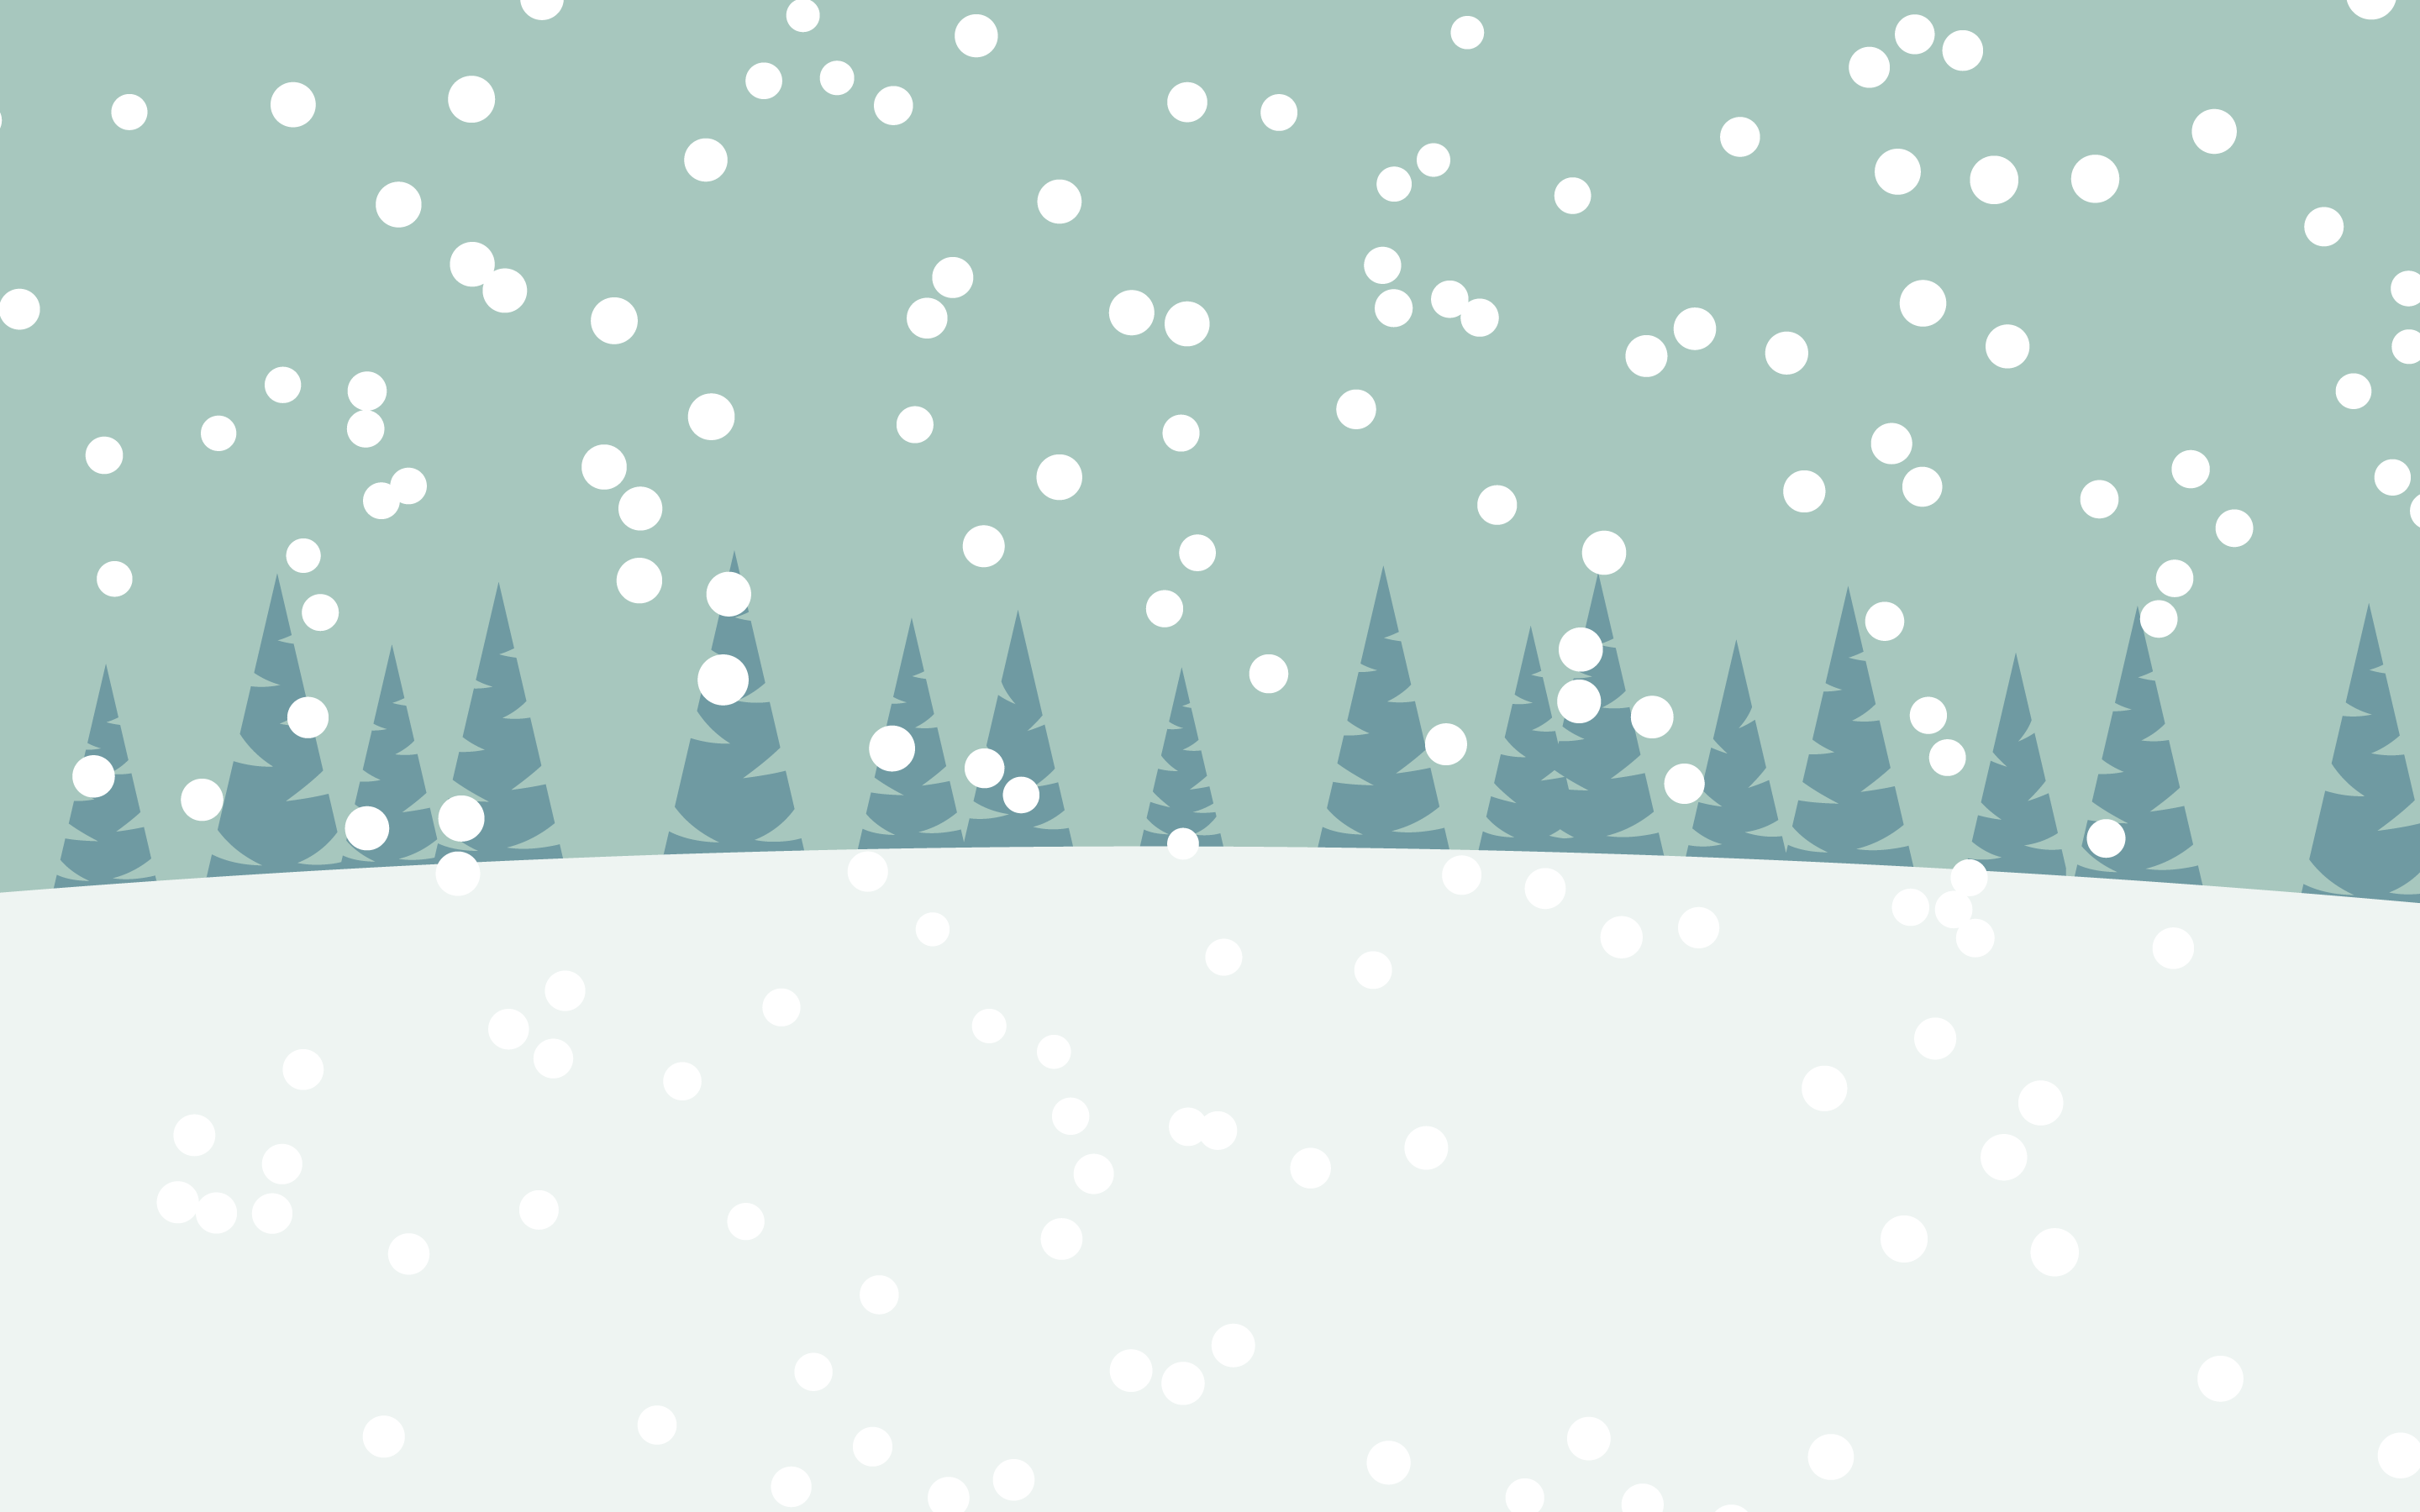 winter scene wallpaper. Winter wallpaper desktop, Christmas desktop wallpaper, Winter desktop background